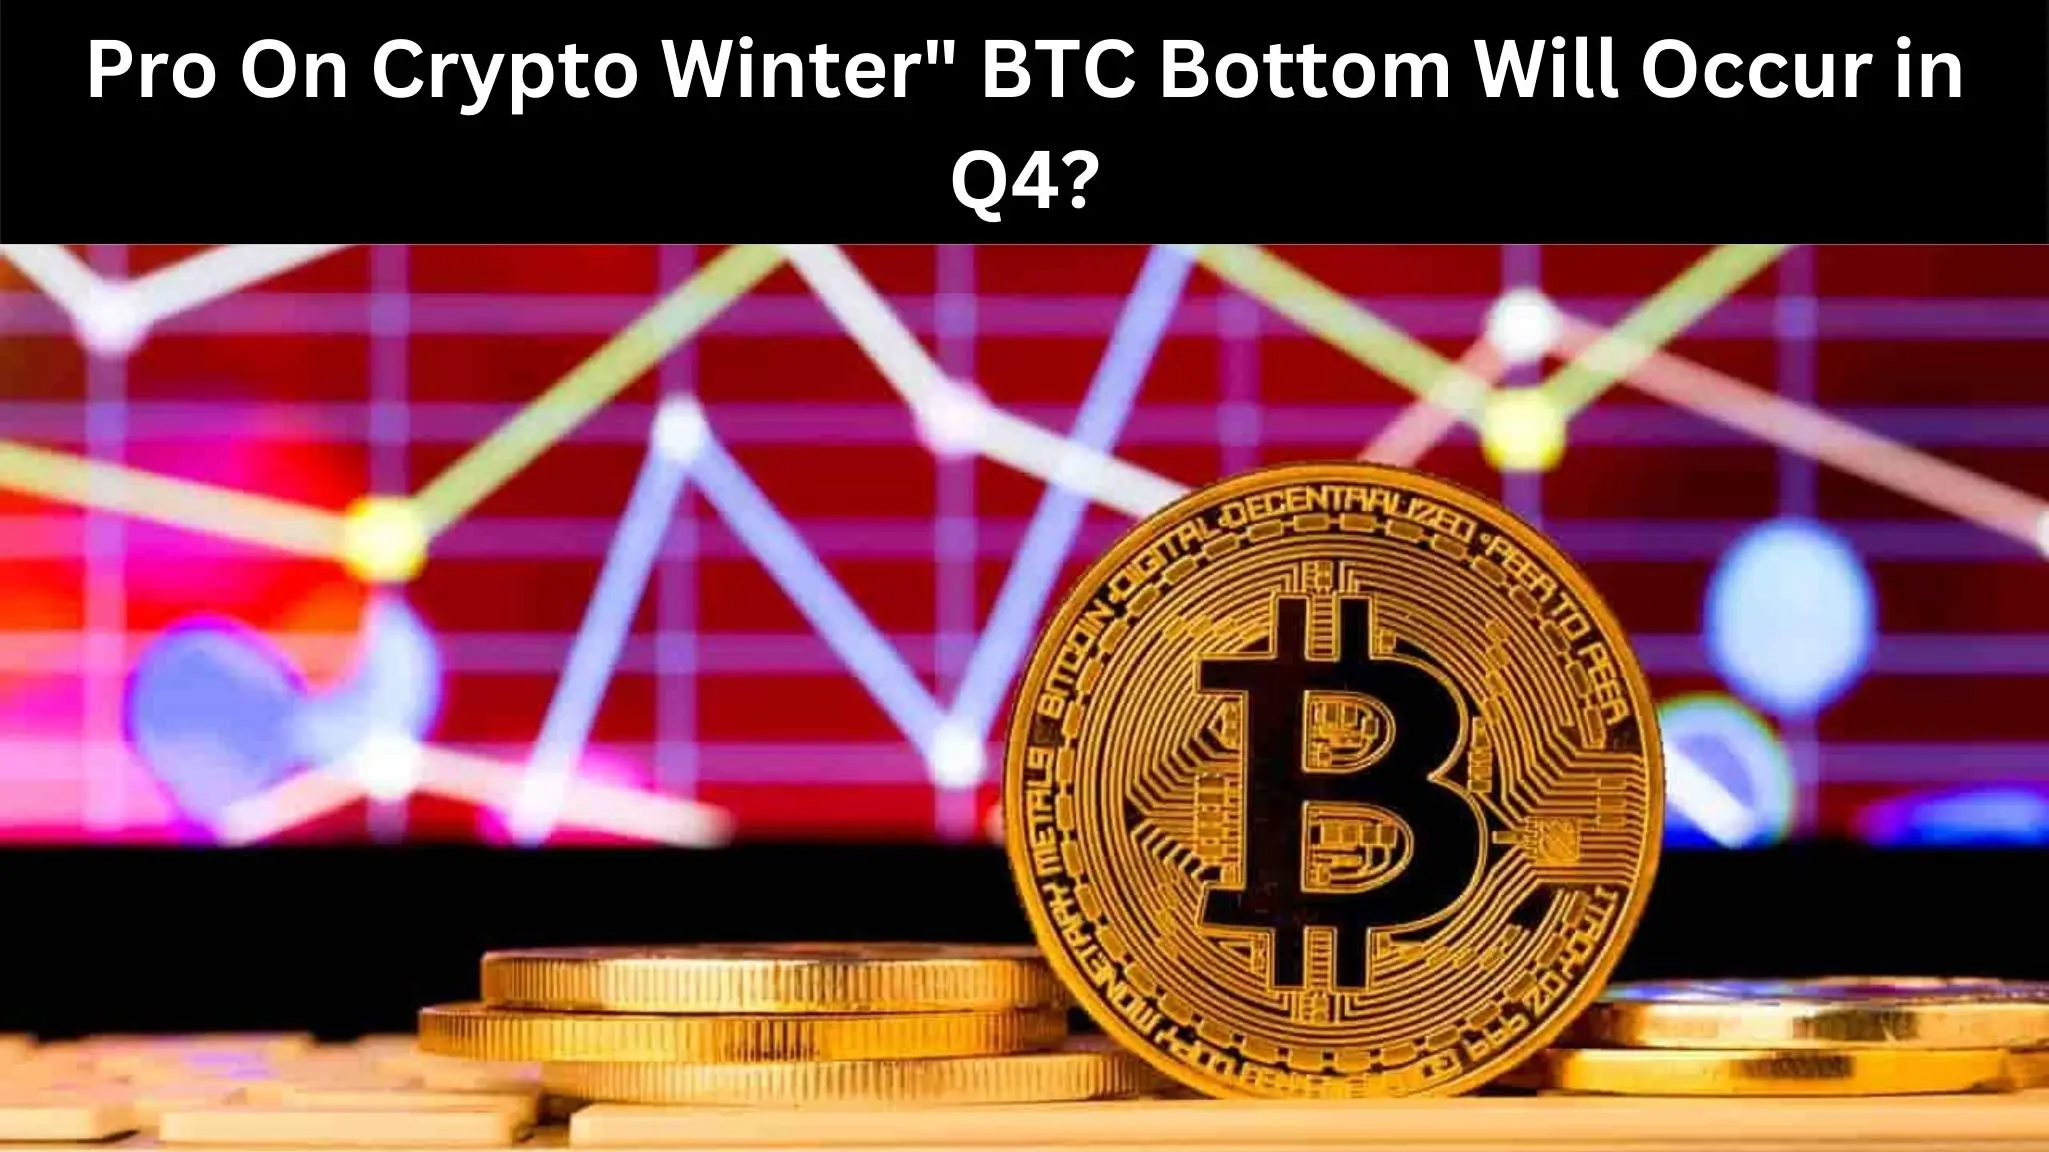 Pro On Crypto Winter" BTC Bottom Will Occur in Q4?